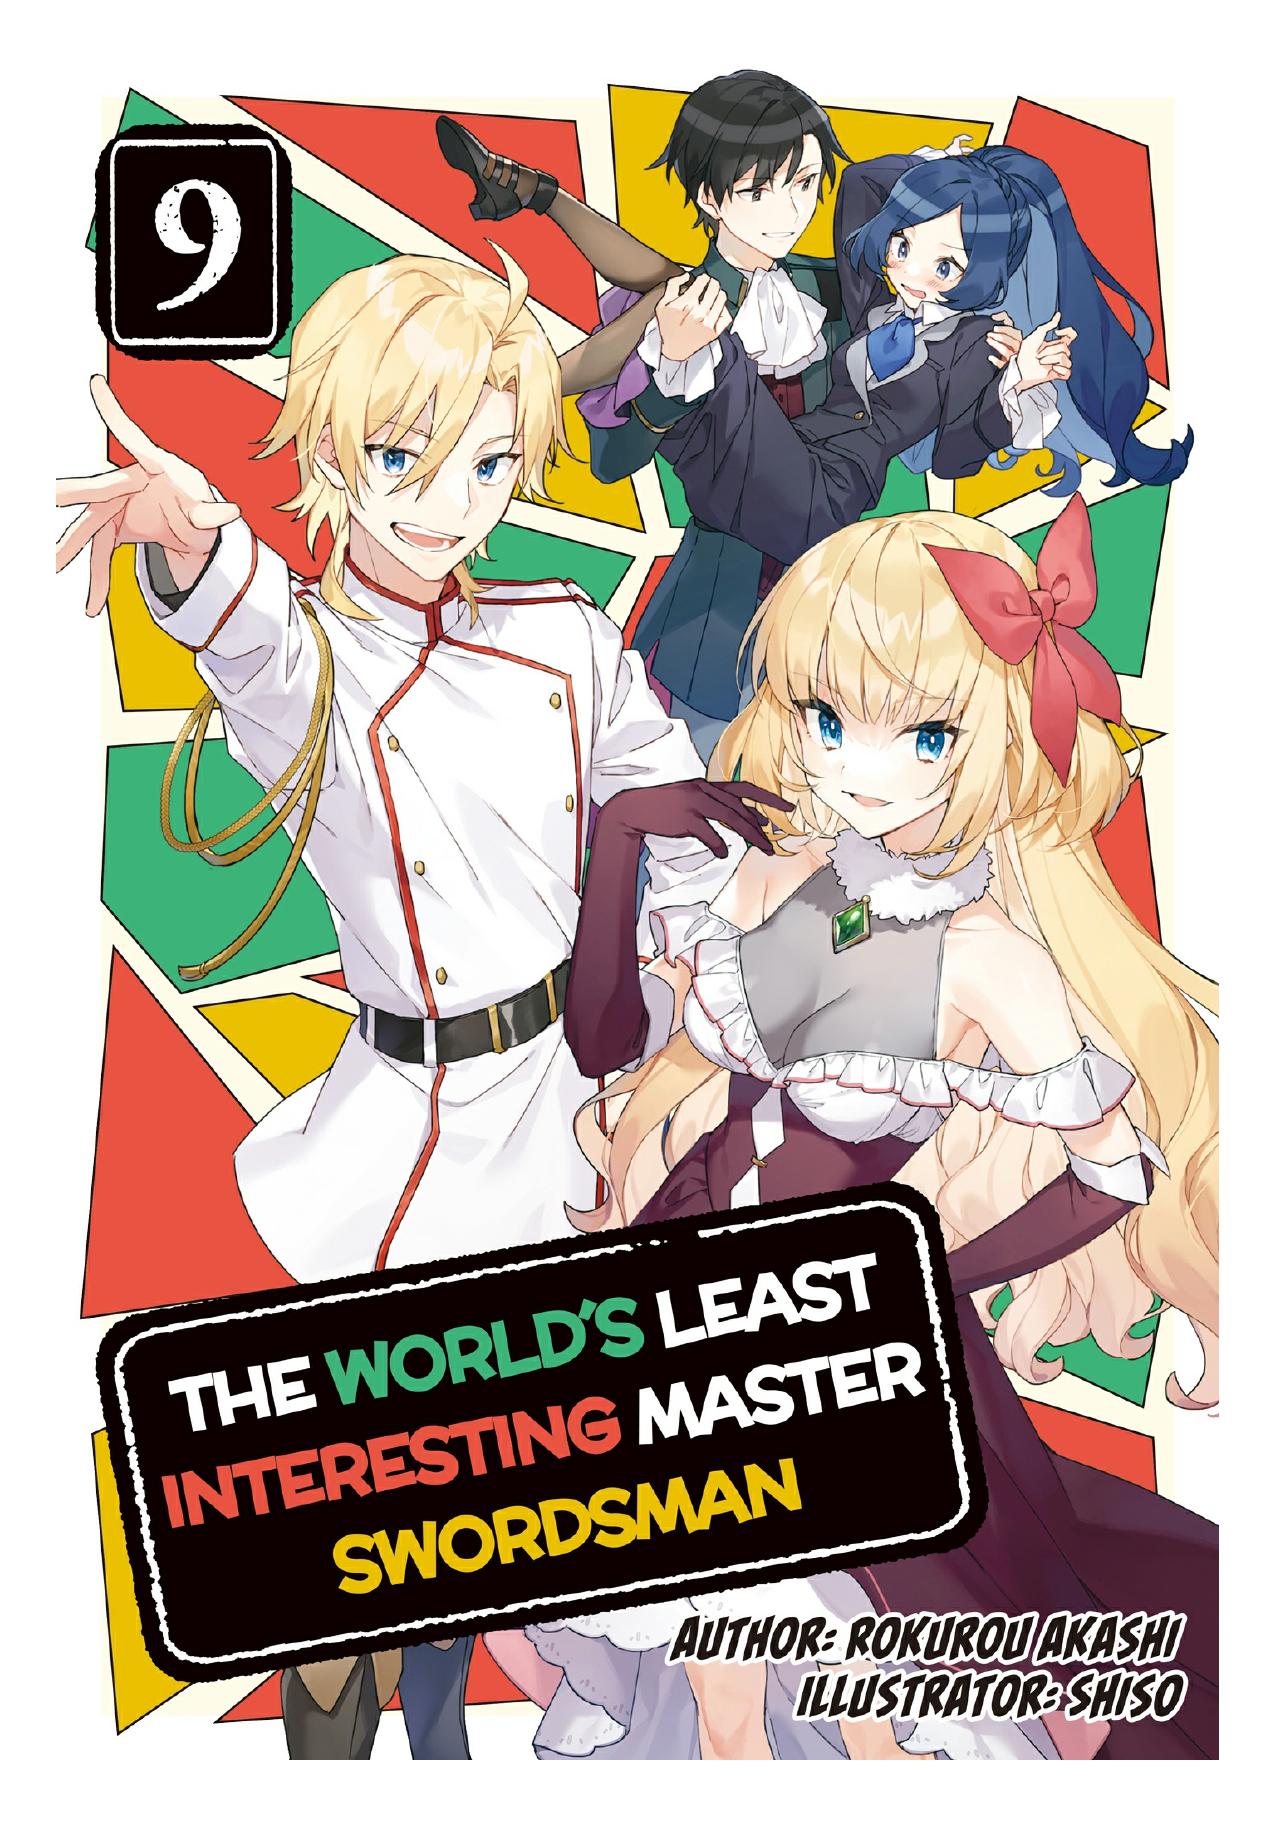 The Worldâs Least Interesting Master Swordsman: Volume 9 by Rokurou Akashi